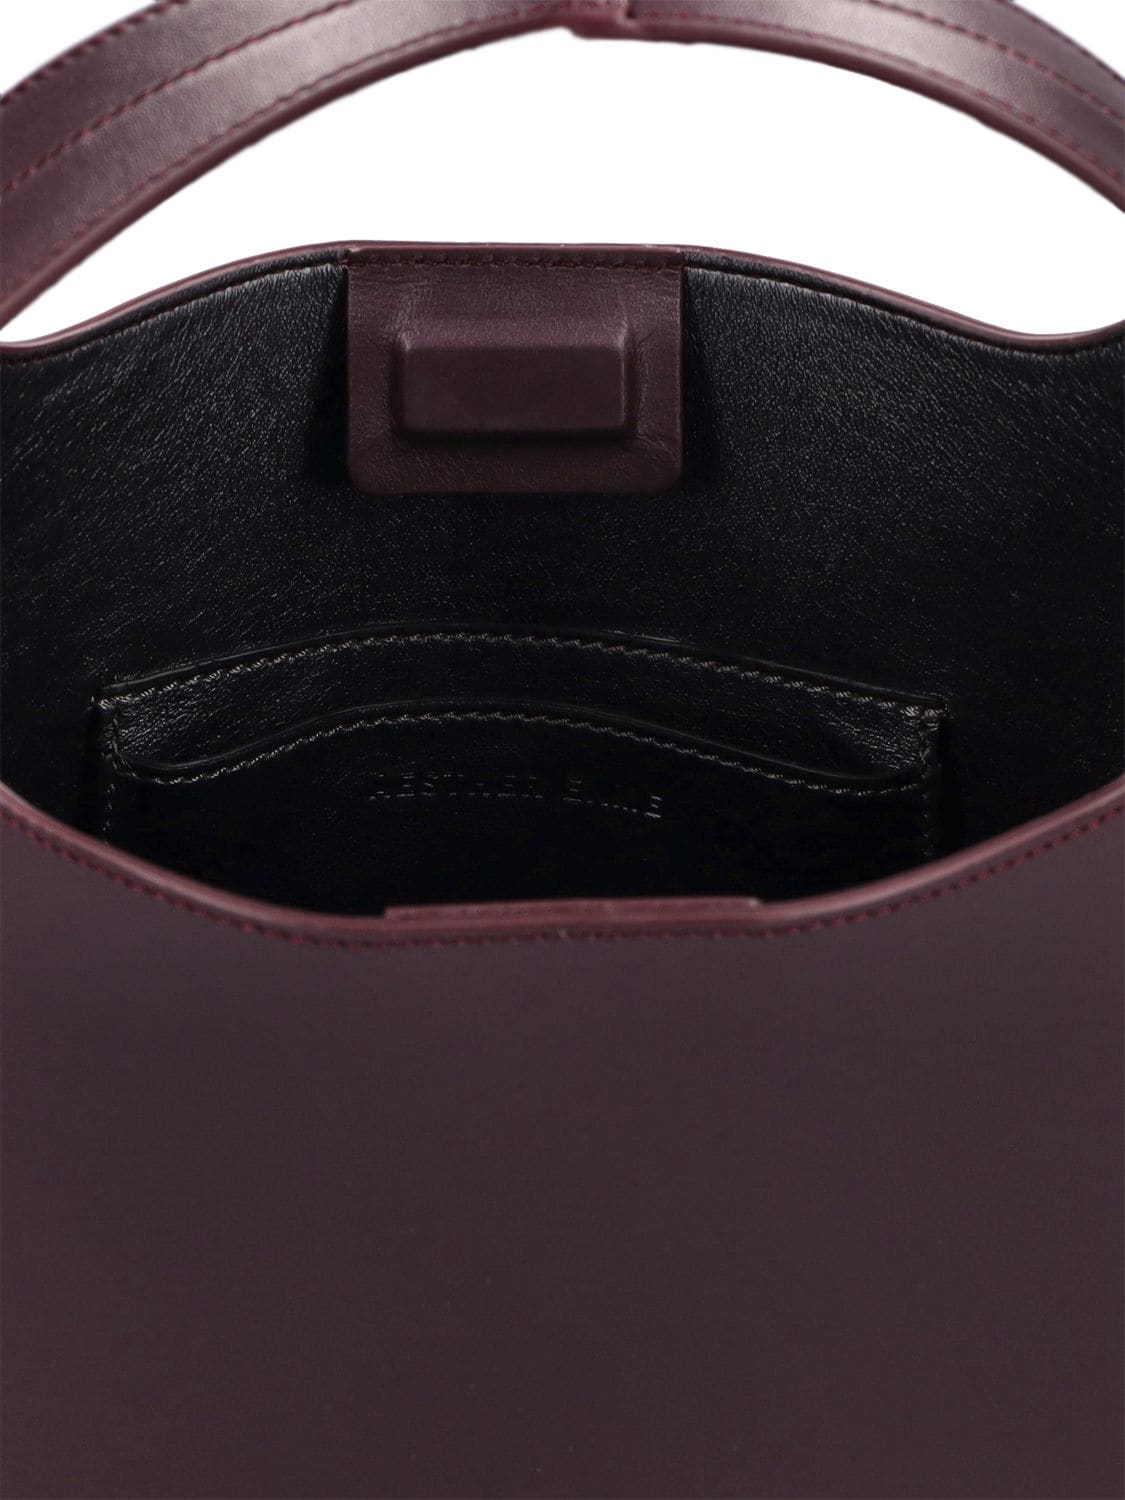 Aesther Ekme Authenticated Mini Sac Handbag